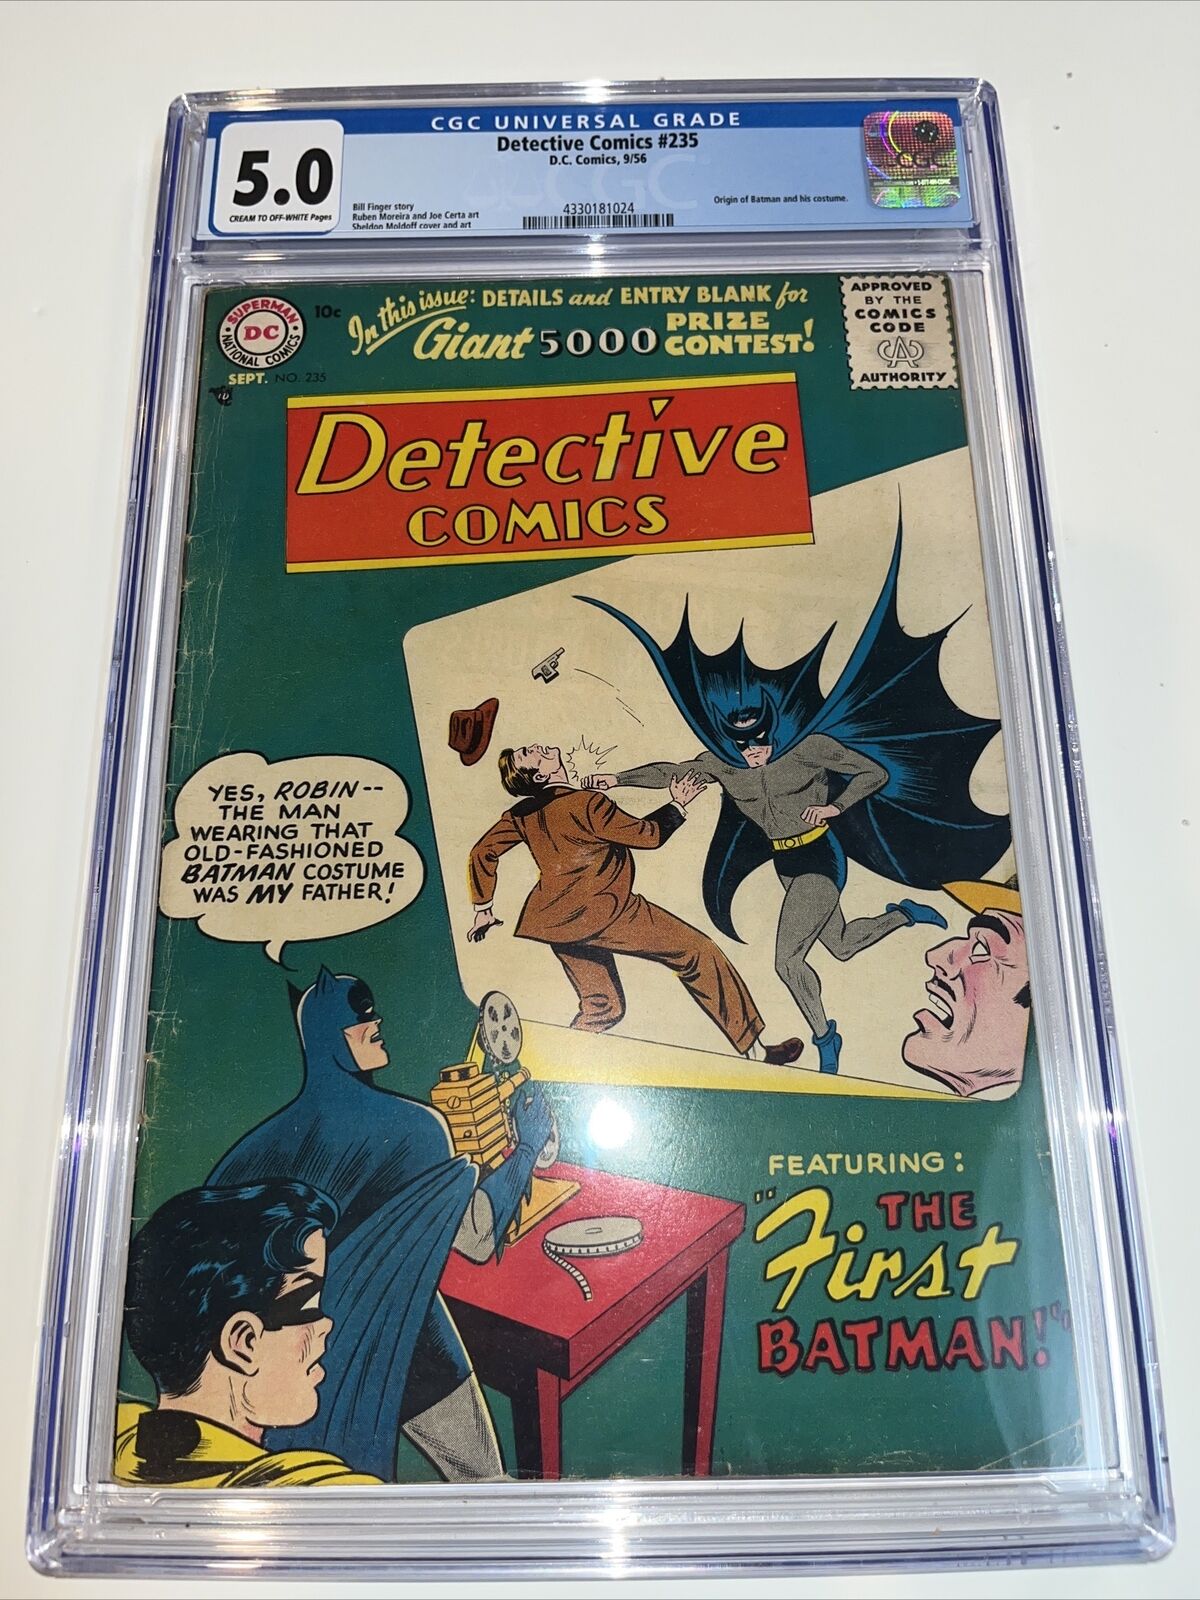 Detective Comics (1956) # 235 (CGC 5.0) 1st App Thomas Wayne As Batman